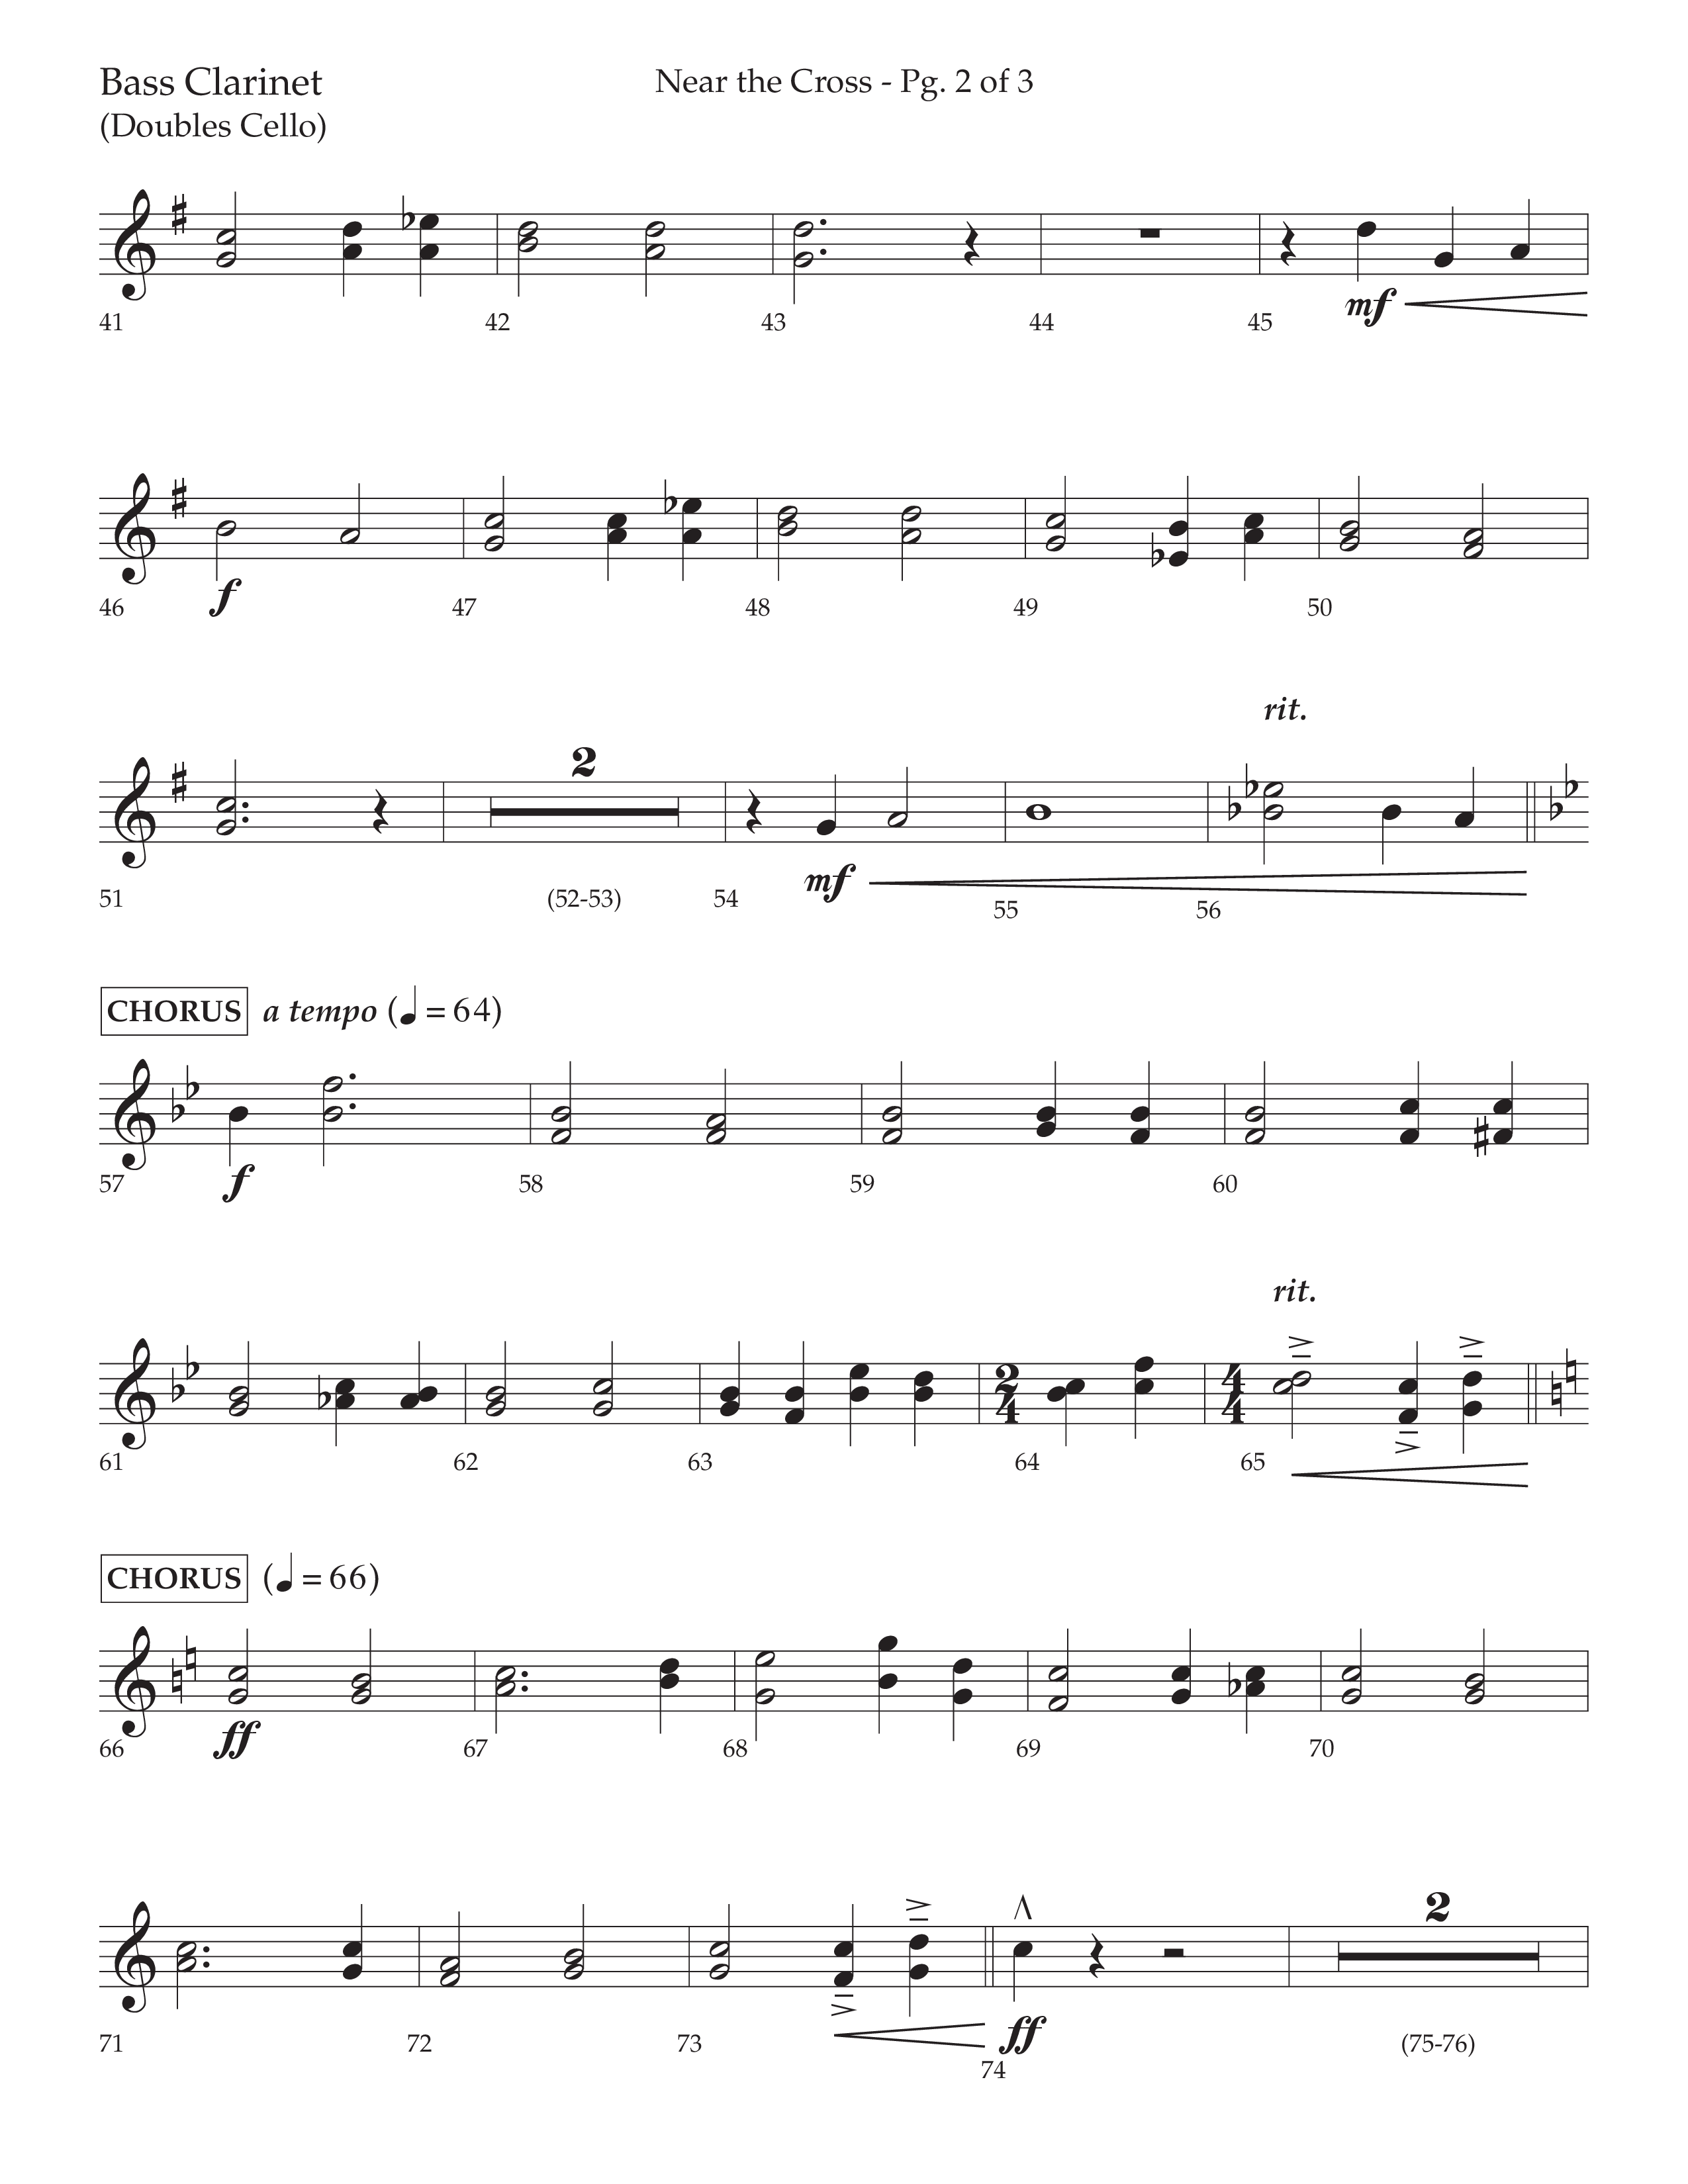 Near The Cross (Choral Anthem SATB) Bass Clarinet (Lifeway Choral / Arr. David Wise / Orch. Cliff Duren)